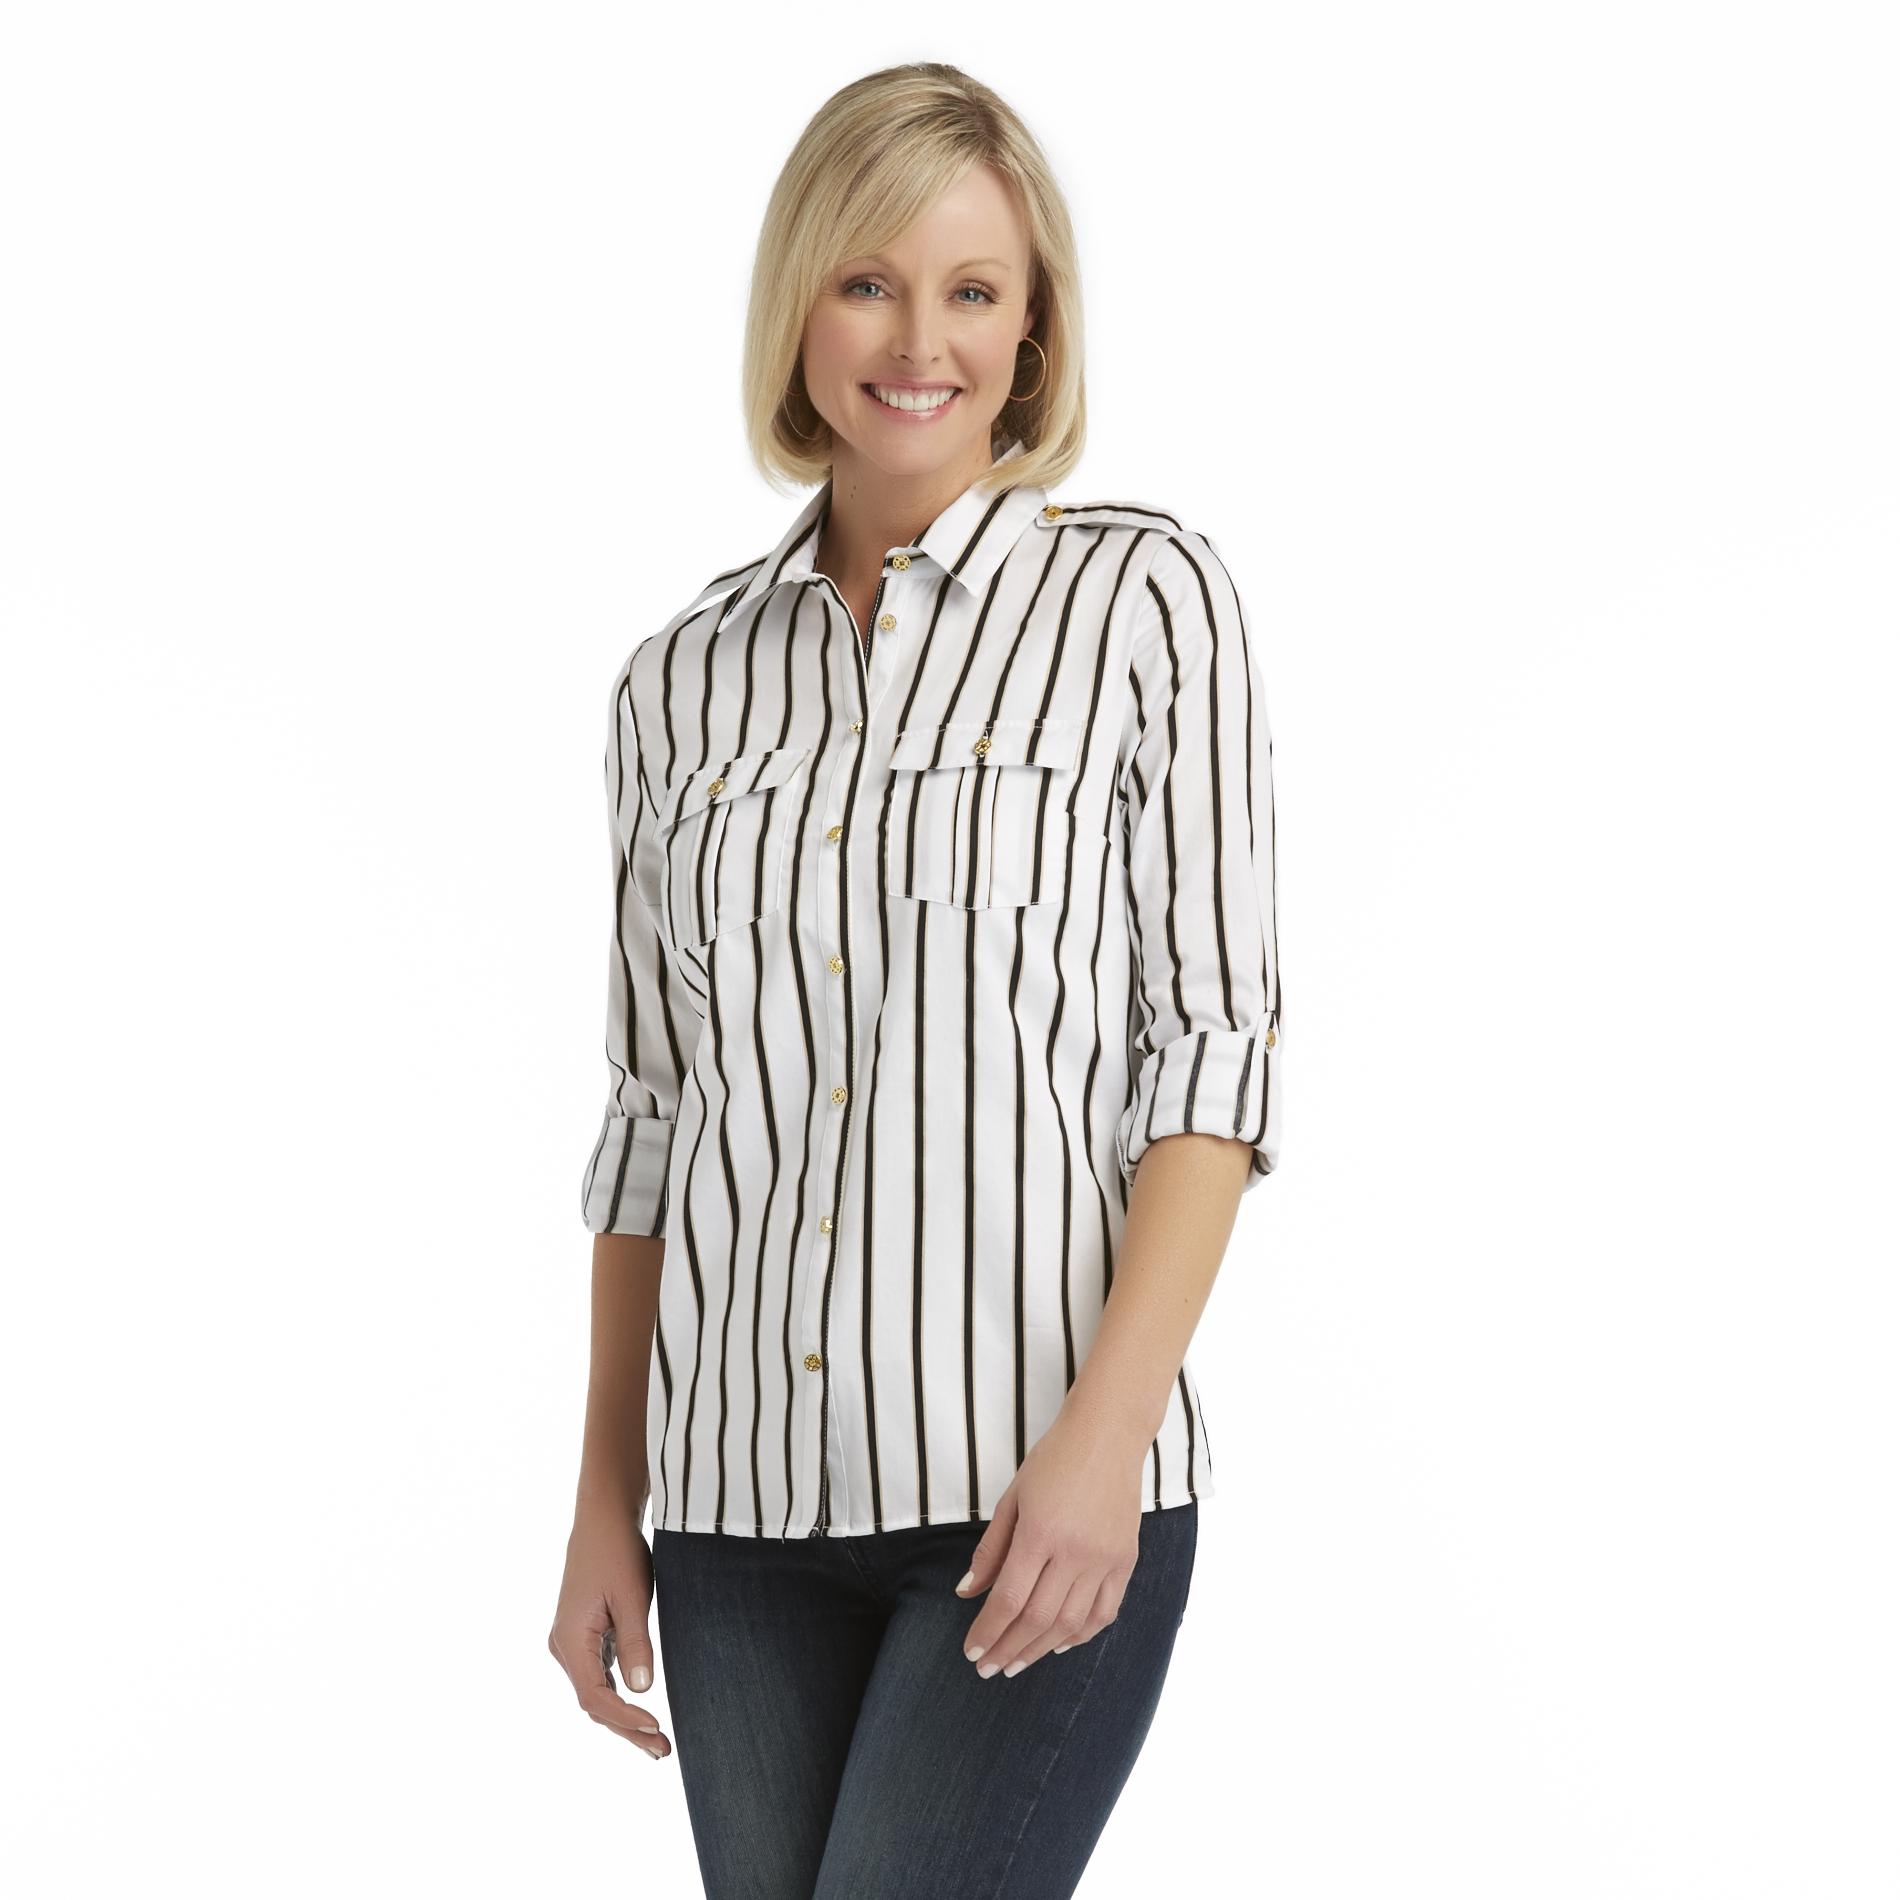 Jaclyn Smith Women's Utility Shirt - Striped